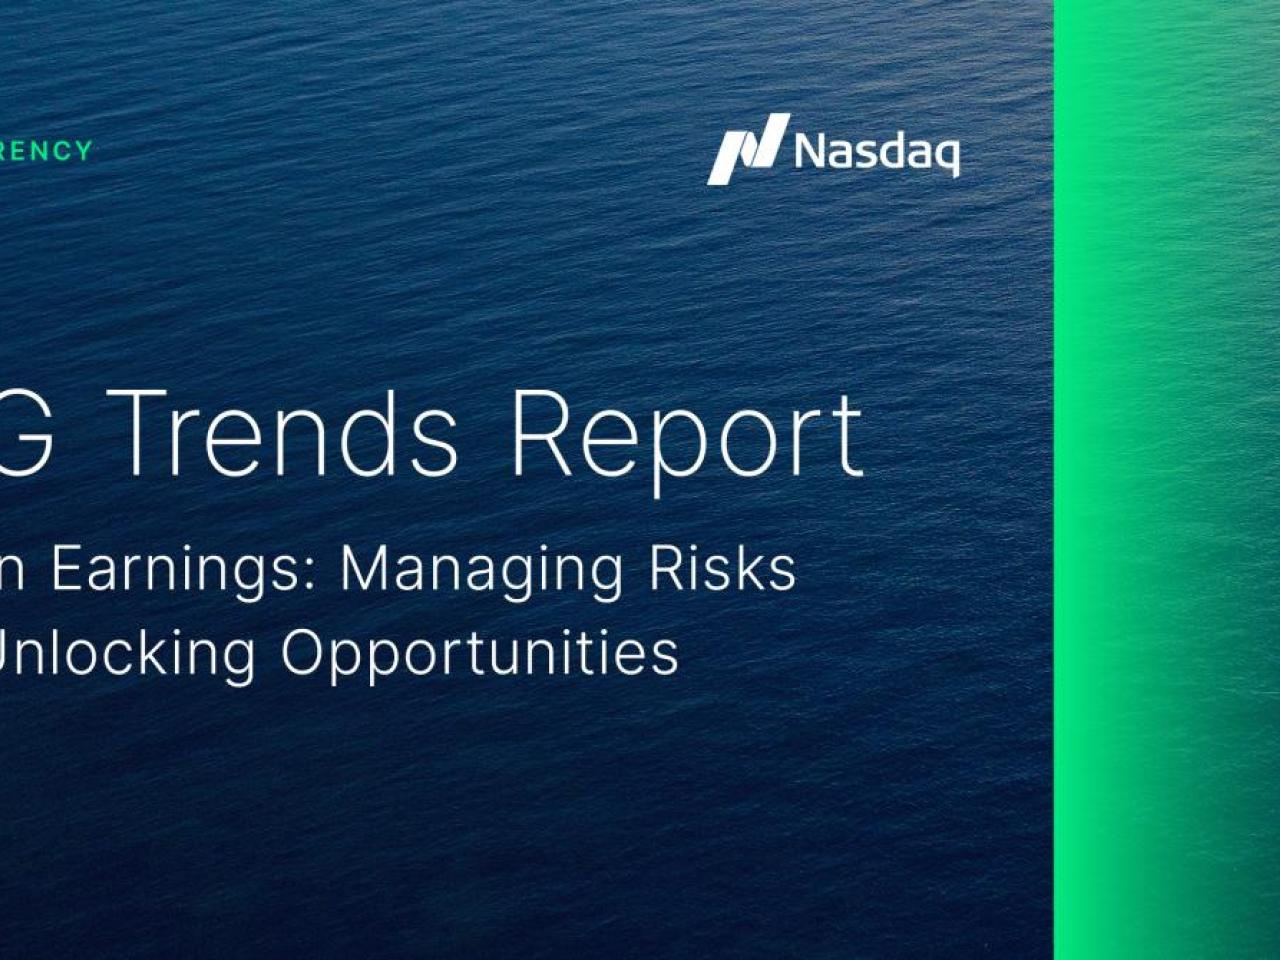 "Nasdaq ESG Trends Report"